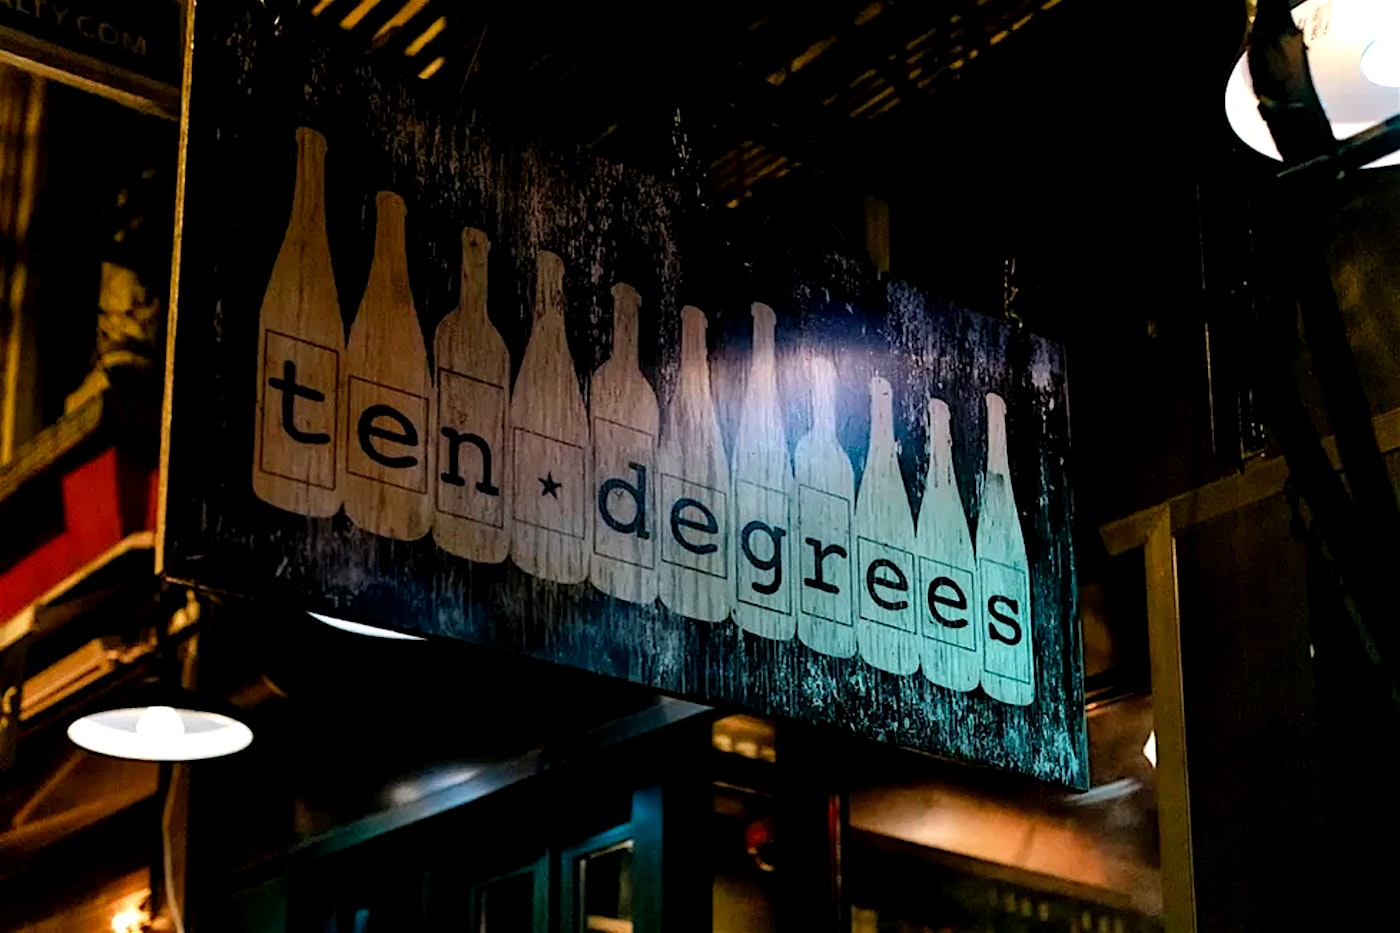 Ten degrees east village bar